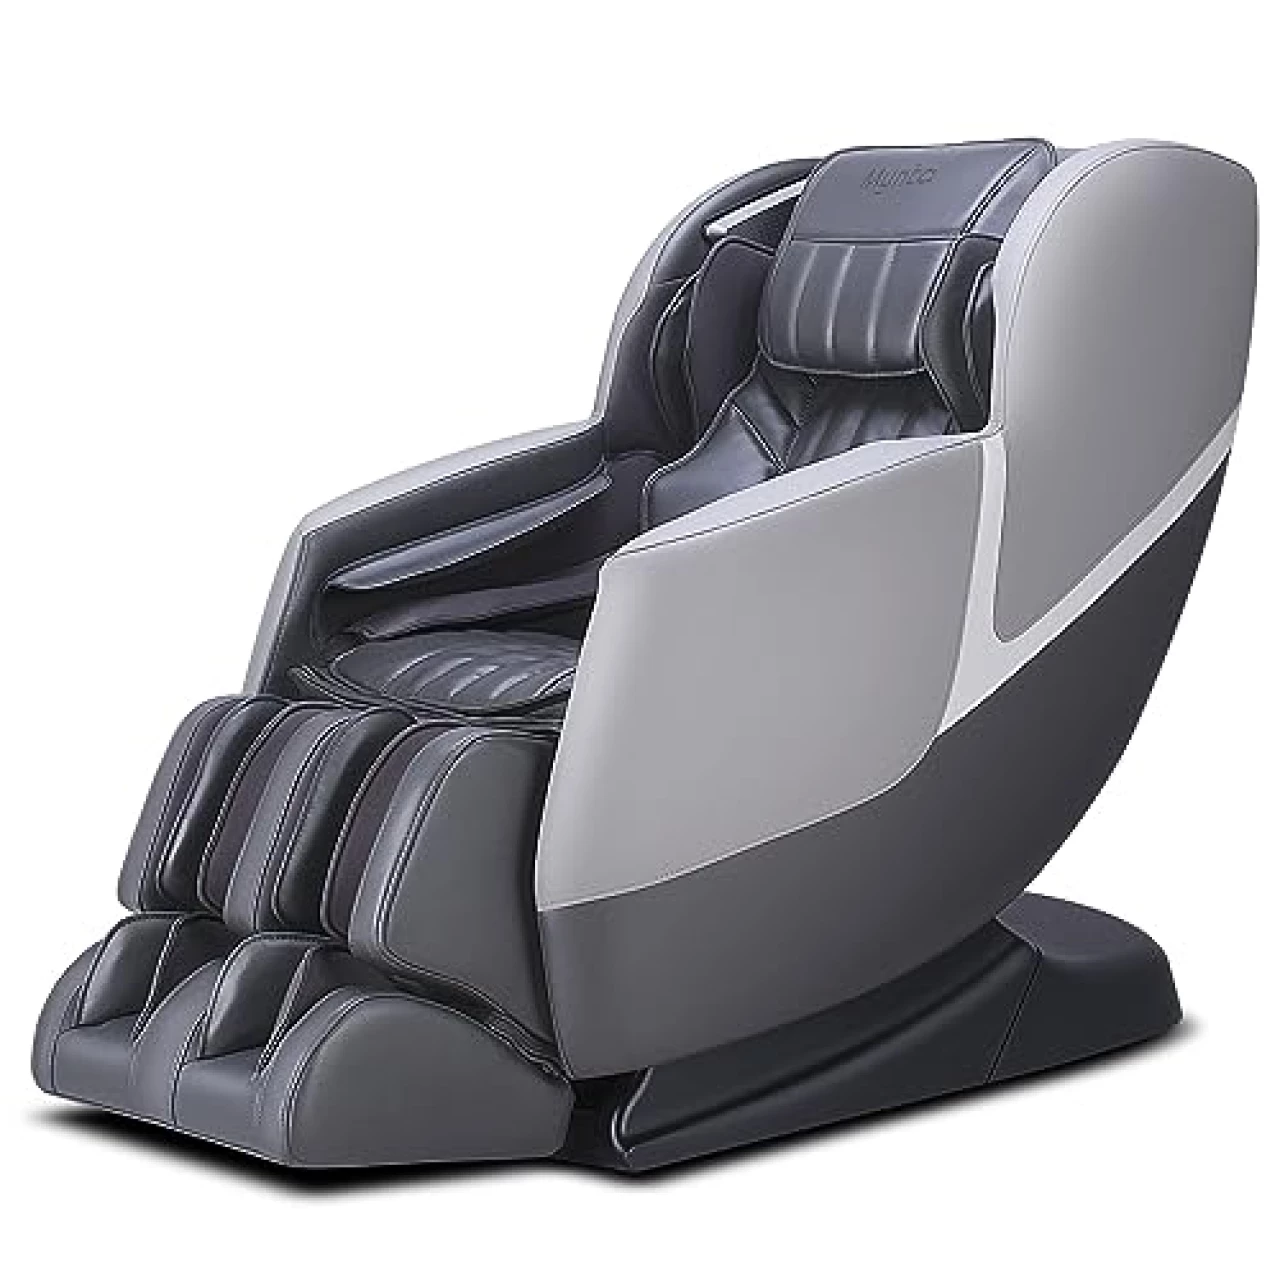 MYNTA Upgraded 3D Massage Chair, Full Body Massage Chair Recliner with Zero Gravity, Body Scan, Thai Stretch, Heat, Airbags, Bluetooth Speaker, Fully Assembled, MC2100 (Dark Grey)